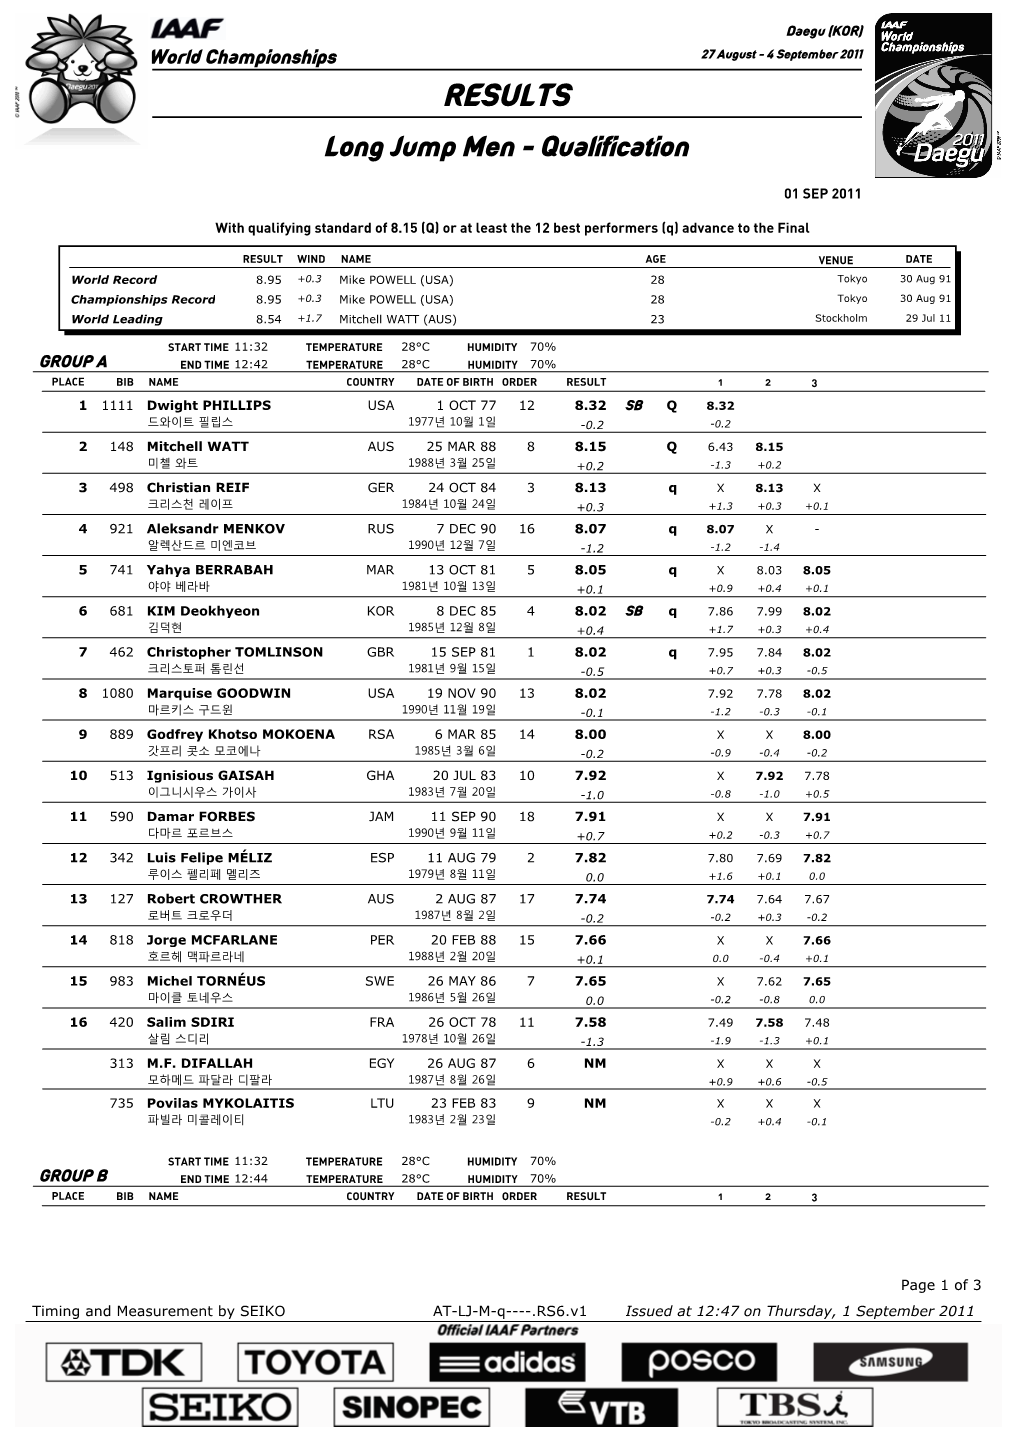 RESULTS Long Jump Men - Qualification